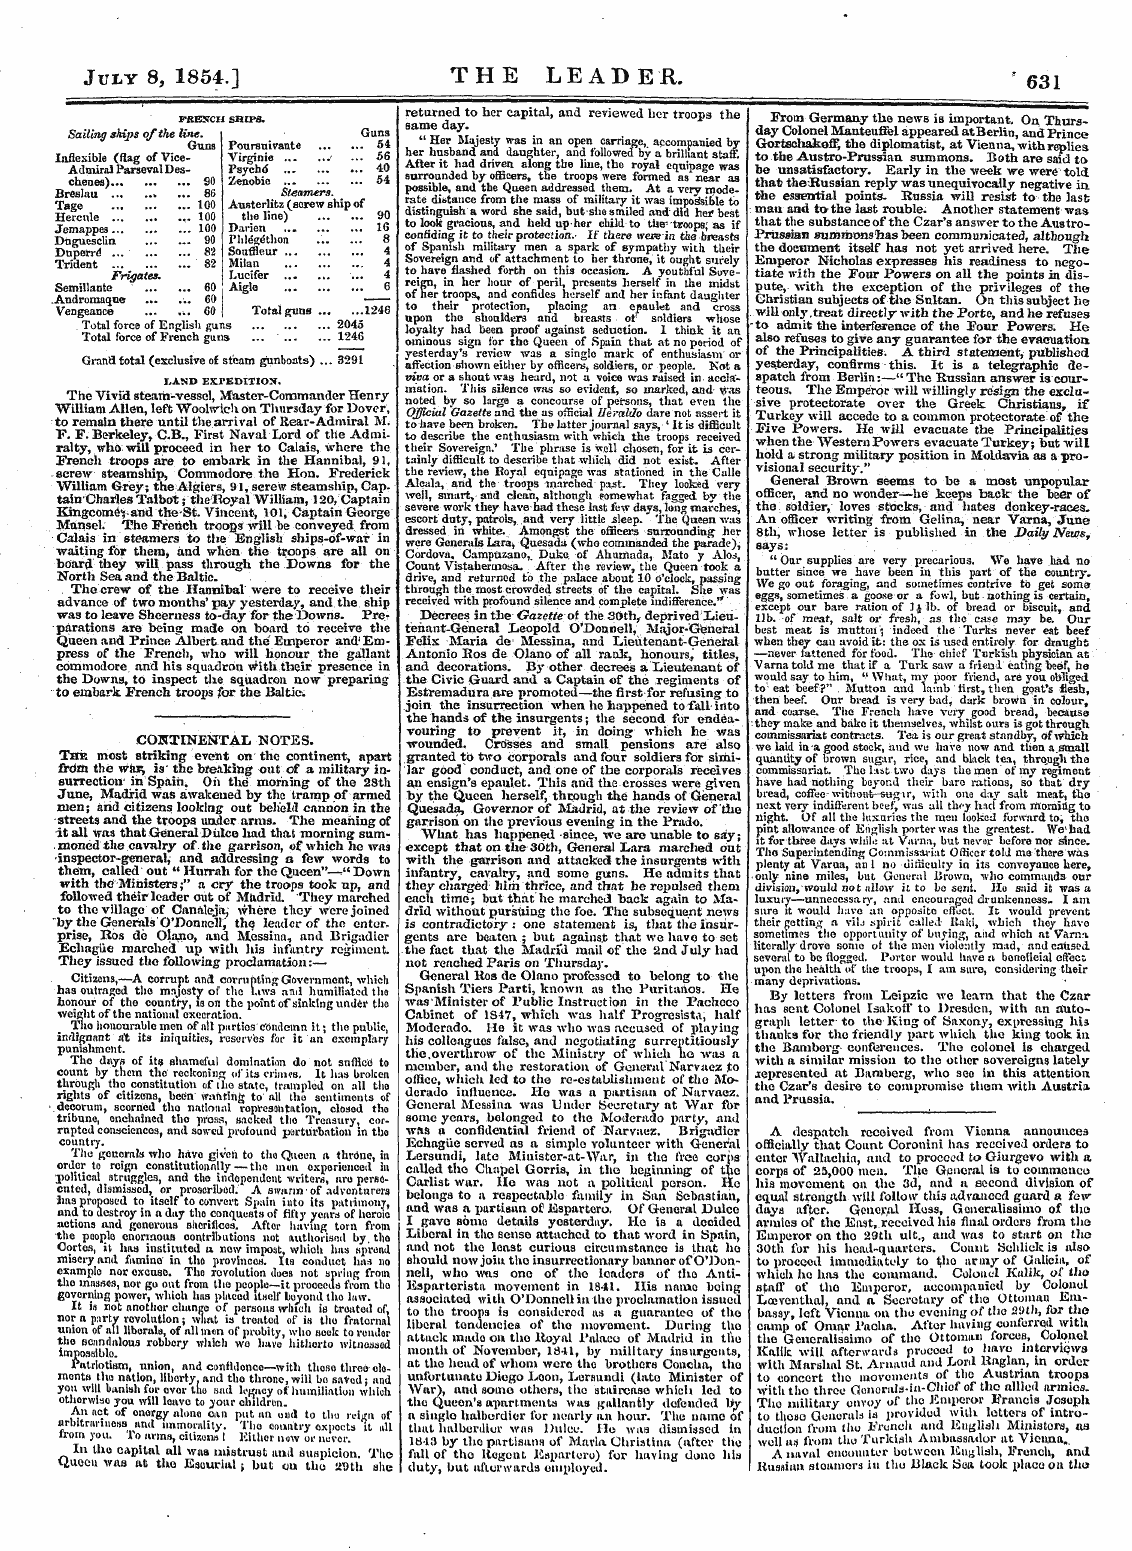 Leader (1850-1860): jS F Y, 2nd edition - July 8, 1854.] The Leader. ' 631